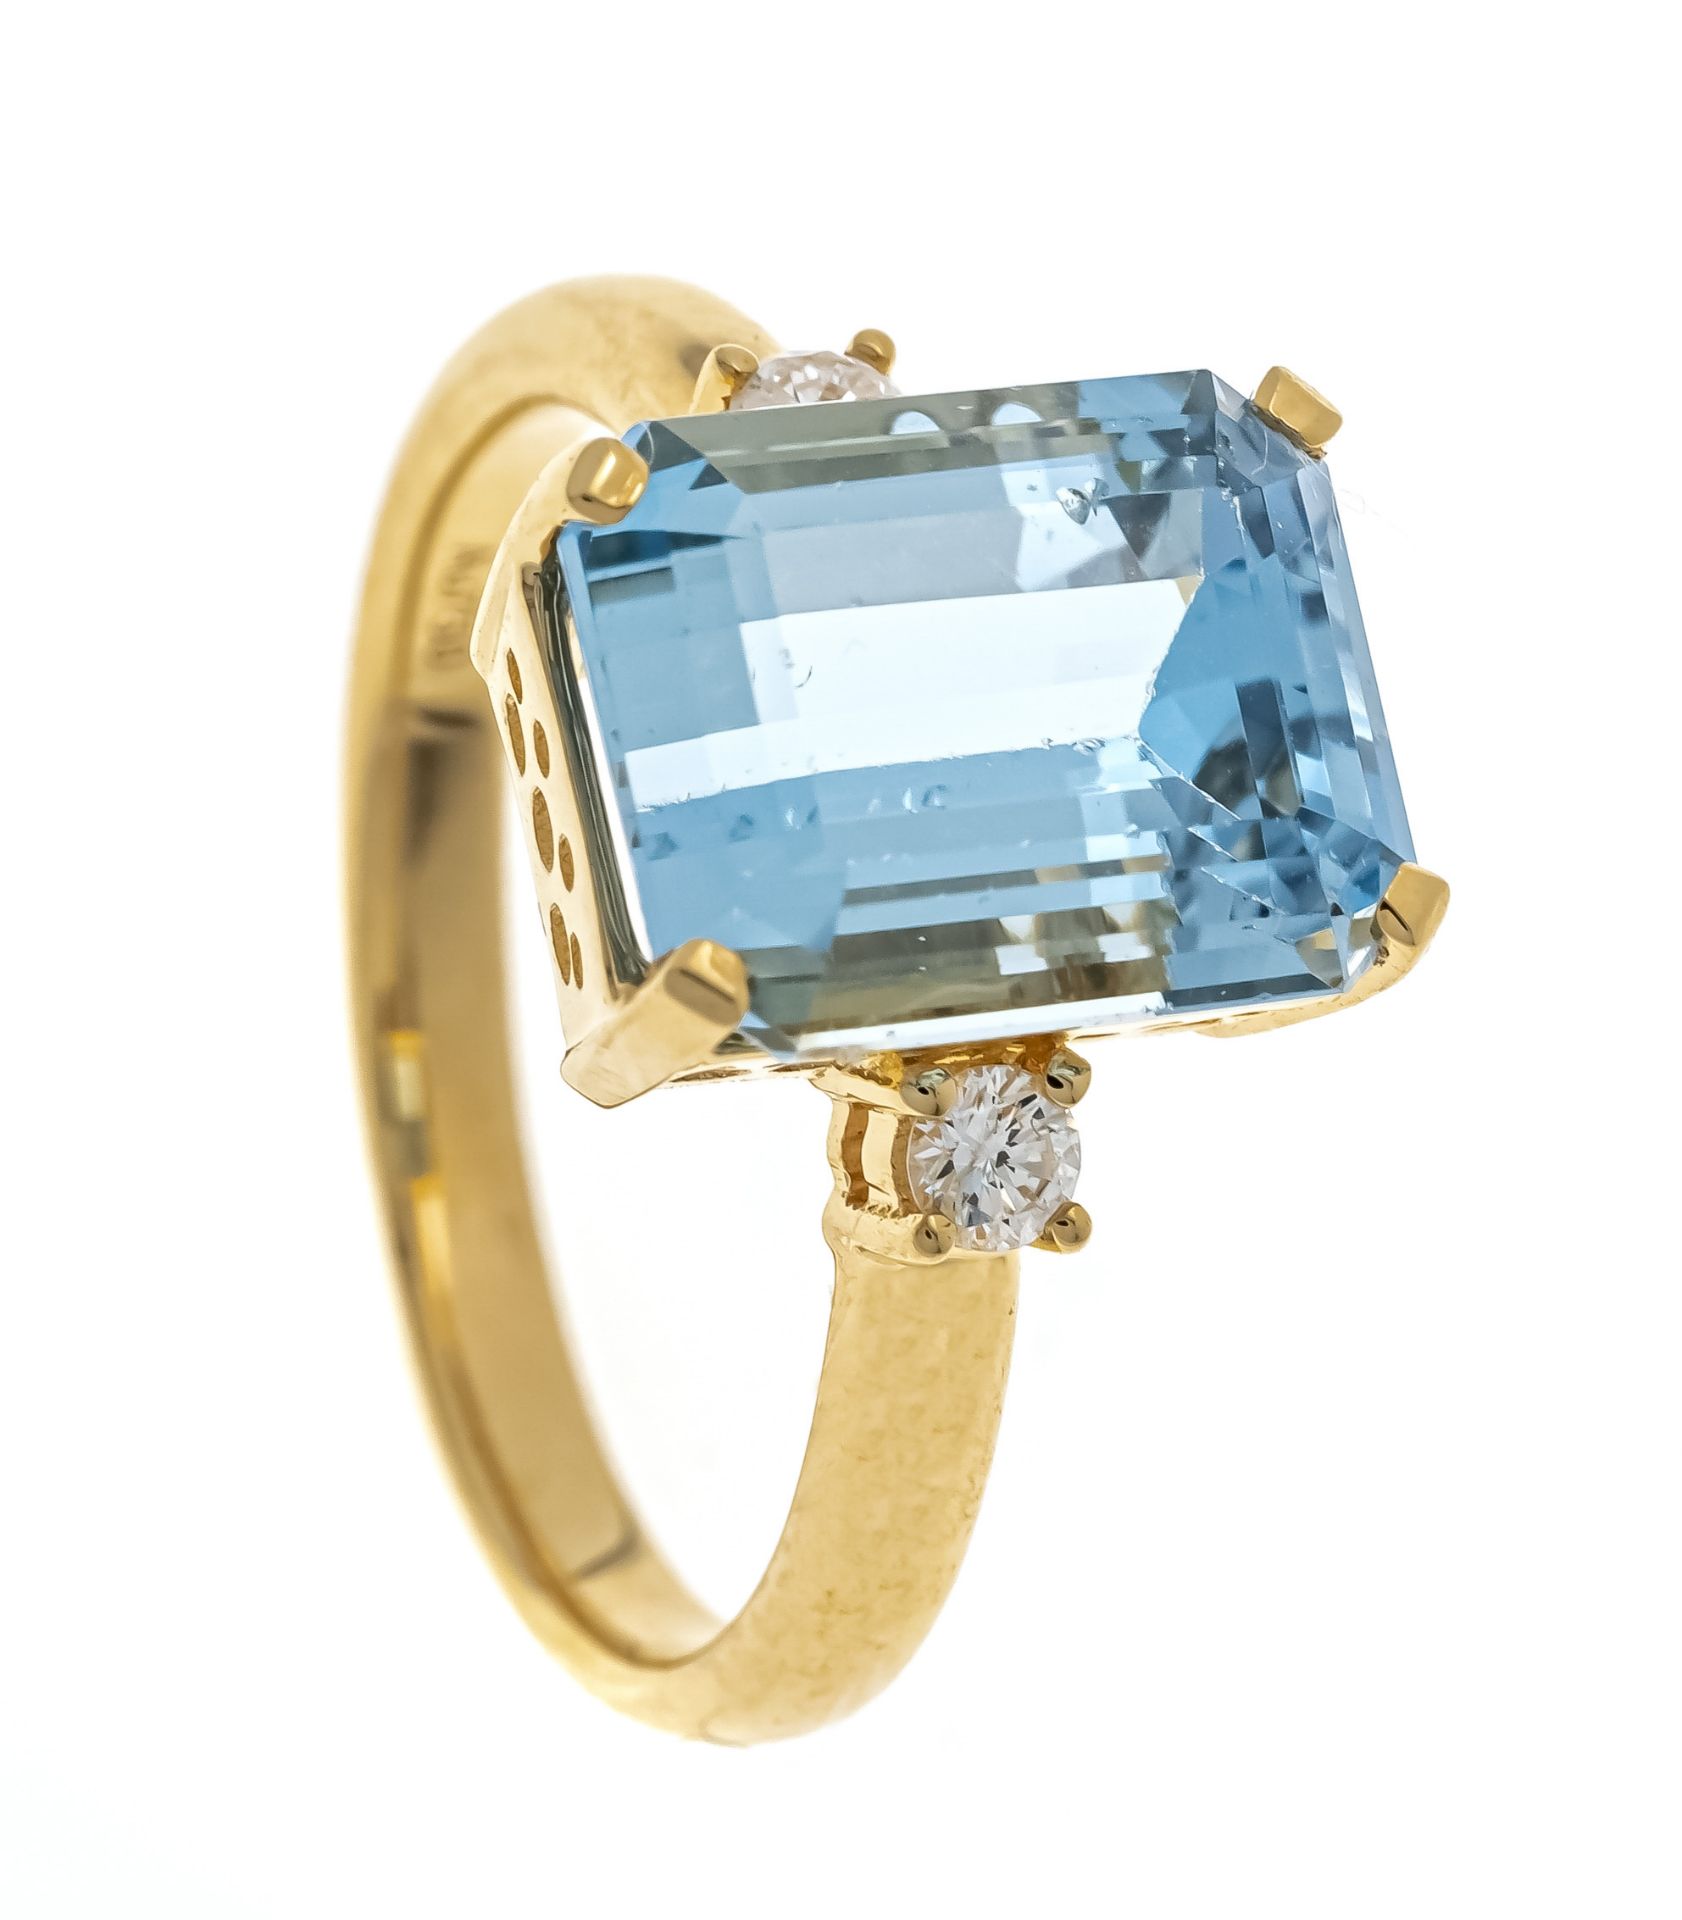 Aquamarine ring GG 750/000 with an emerald-cut faceted aquamarine 5.0 ct fine light blue,